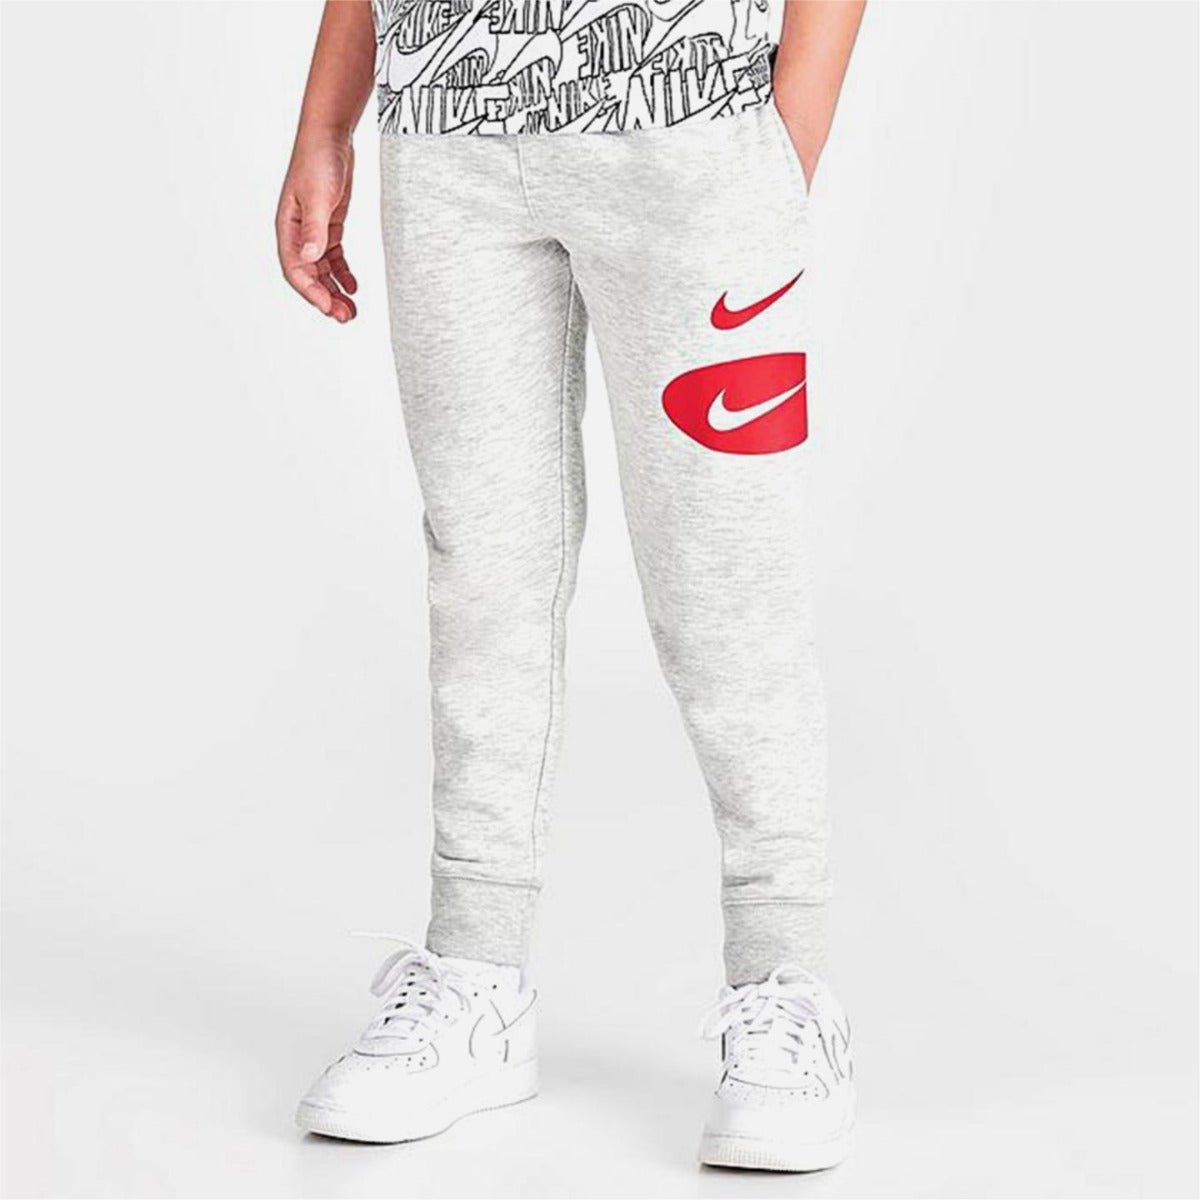 Pantaloni Nike Sportswear Bambini - Grigio/Rosso